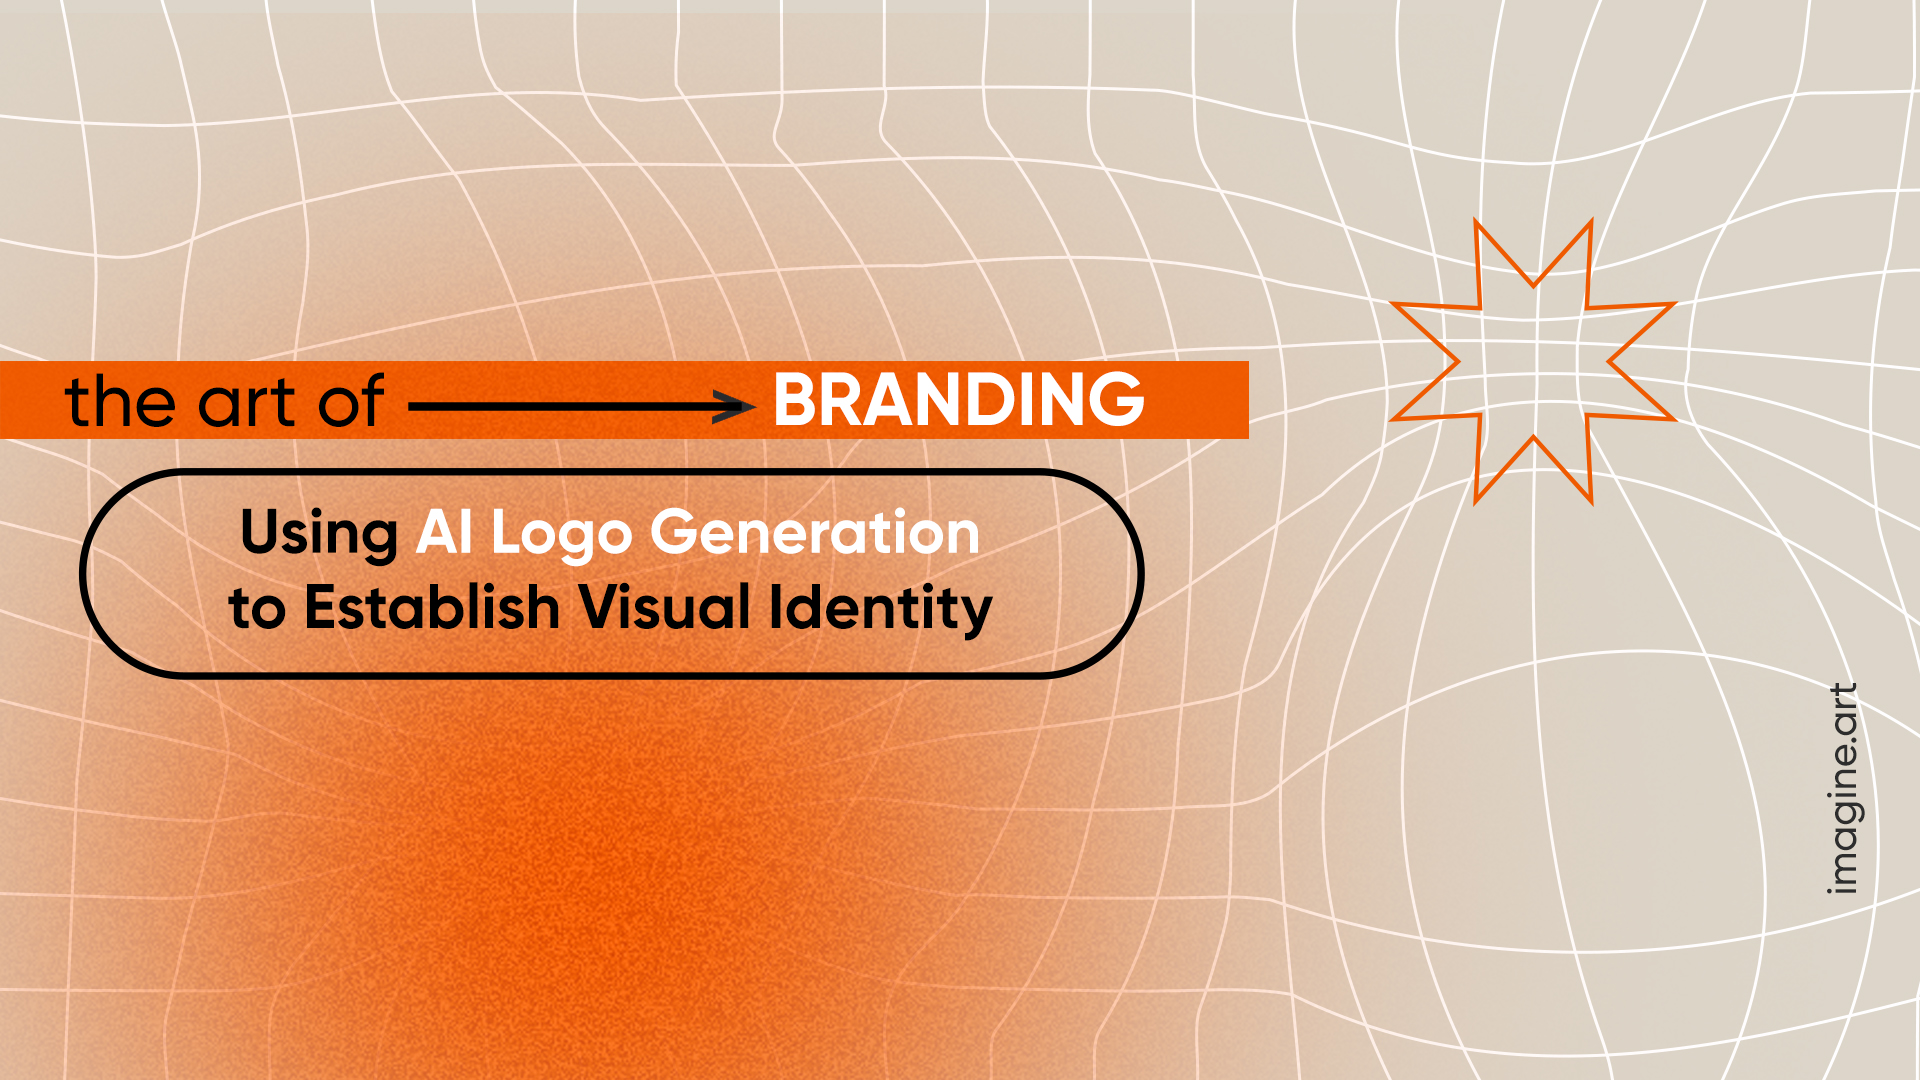 The Art of Branding: Using AI Logo Generation to Establish Visual Identity